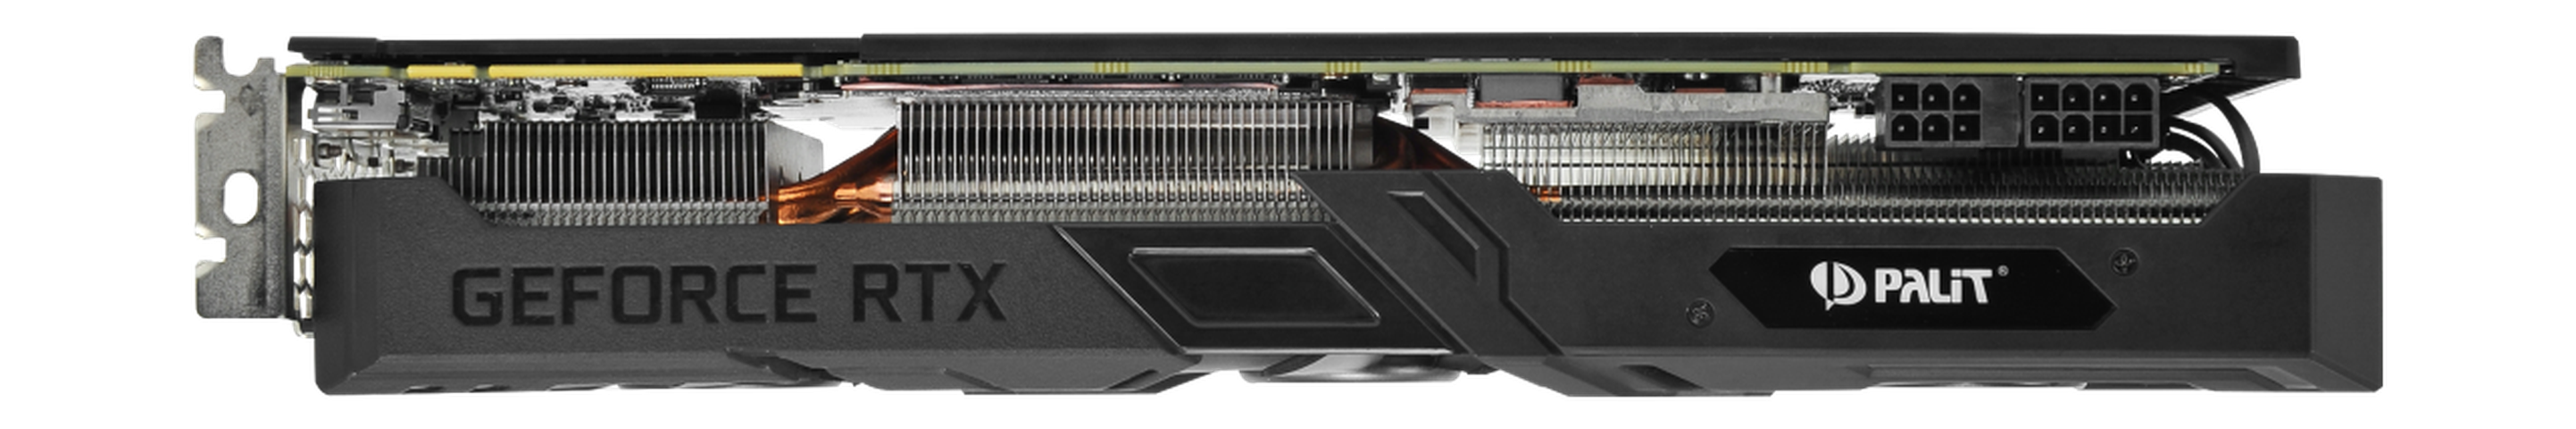 Palit 2070 super. Видеокарта Palit GEFORCE RTX 2080 super 1650mhz PCI-E 3.0 8192mb 15500mhz 256 bit HDMI HDCP GAMEROCK. Palit 2080 super. Видеокарта Palit GEFORCE RTX 2080 super 1650mhz PCI-E 3.0 8192mb 15500mhz 256 bit HDMI 3xdisplayport HDCP White GAMEROCK. Rtx 4080 super palit gamingpro